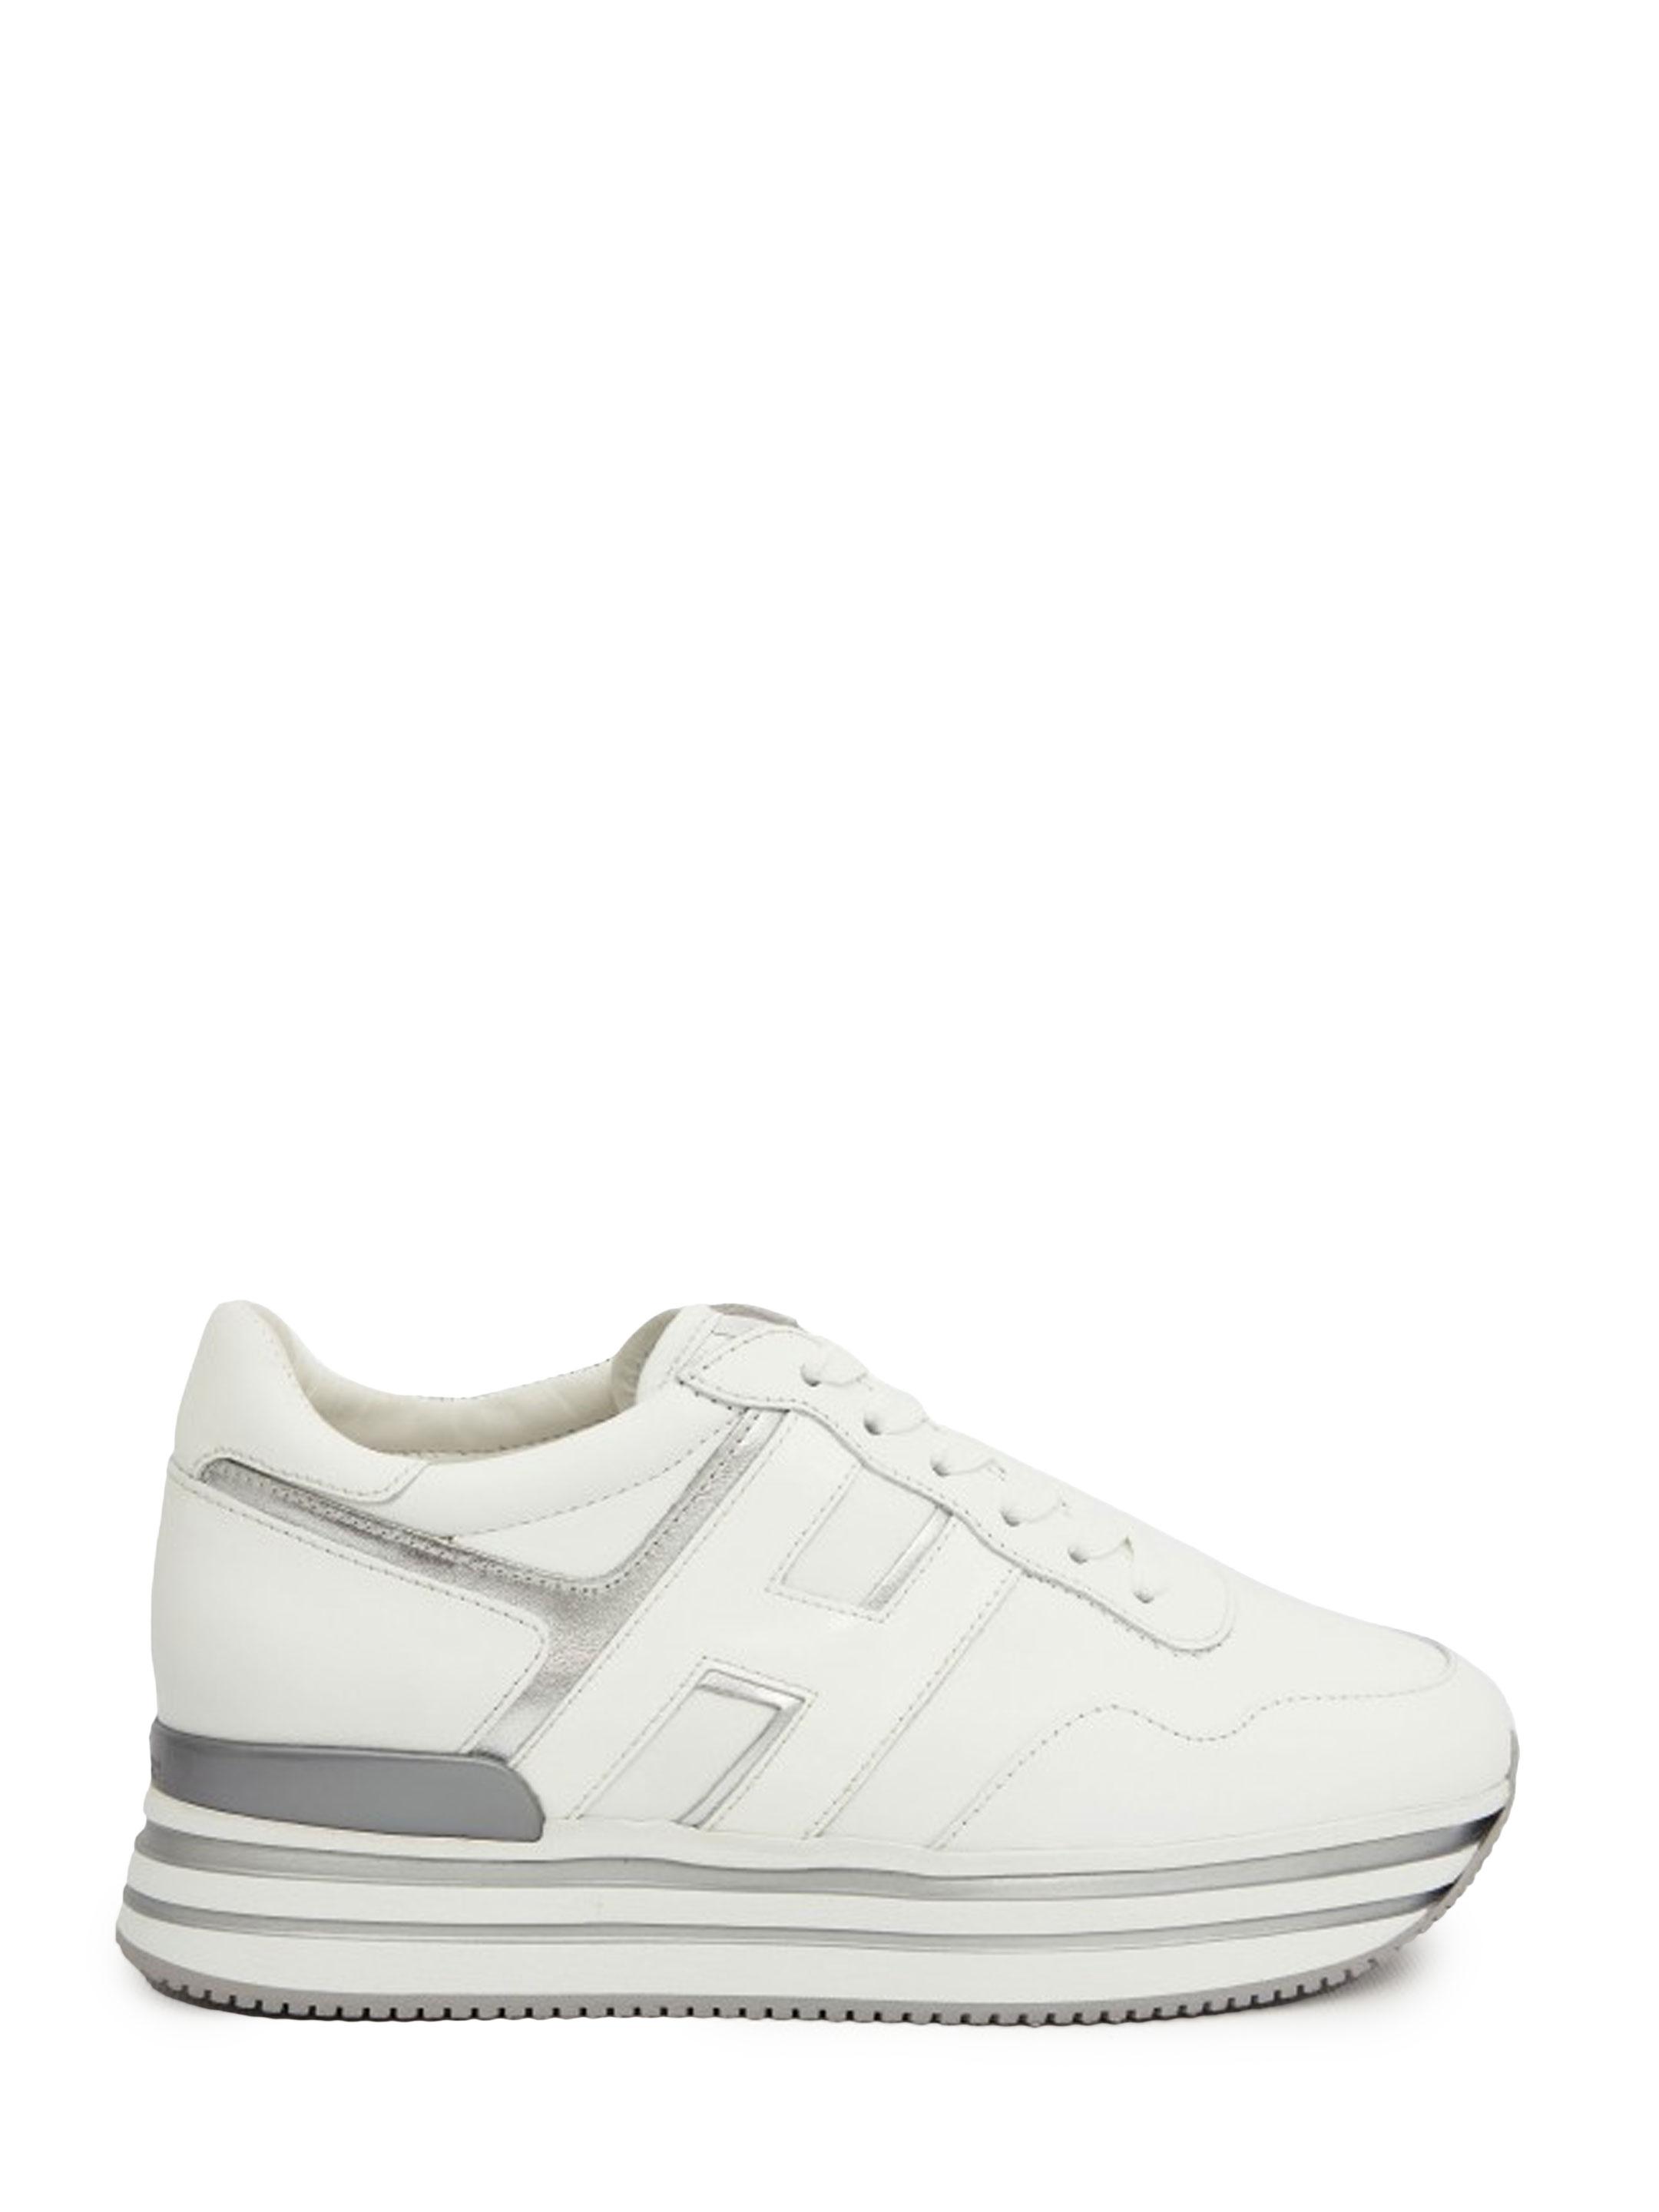 Hogan Midi Platform Sneakers in White | Lyst